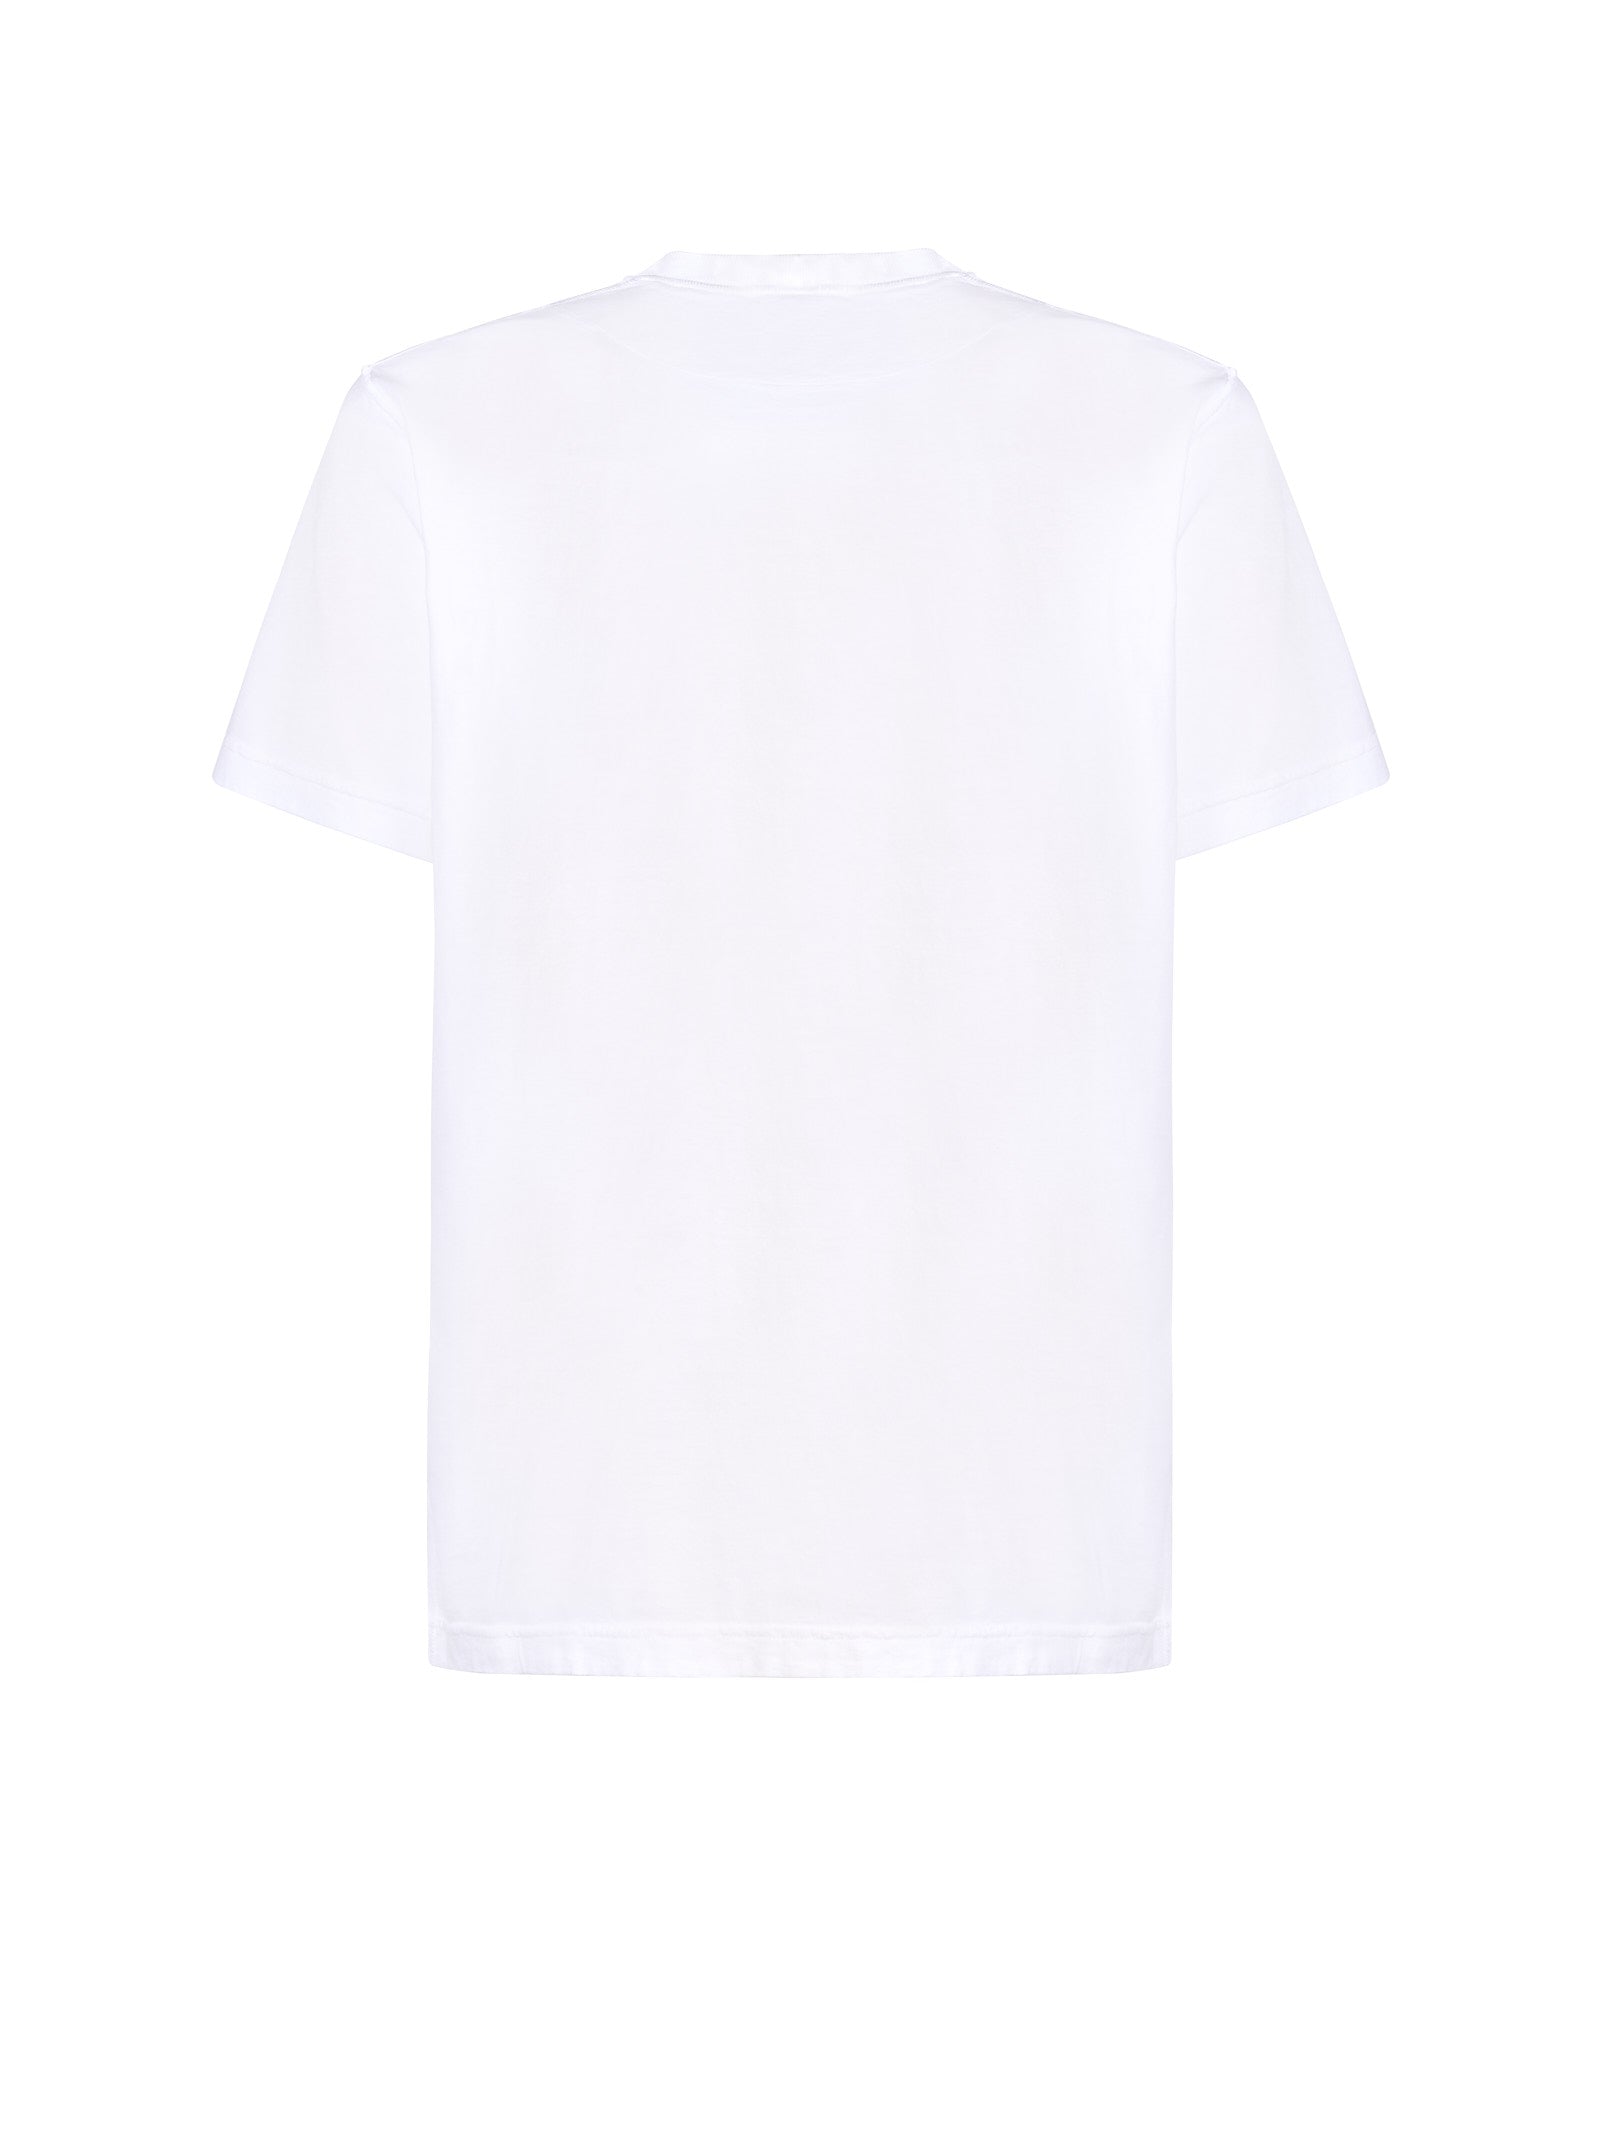 T-shirt STONE ISLAND
Bianco